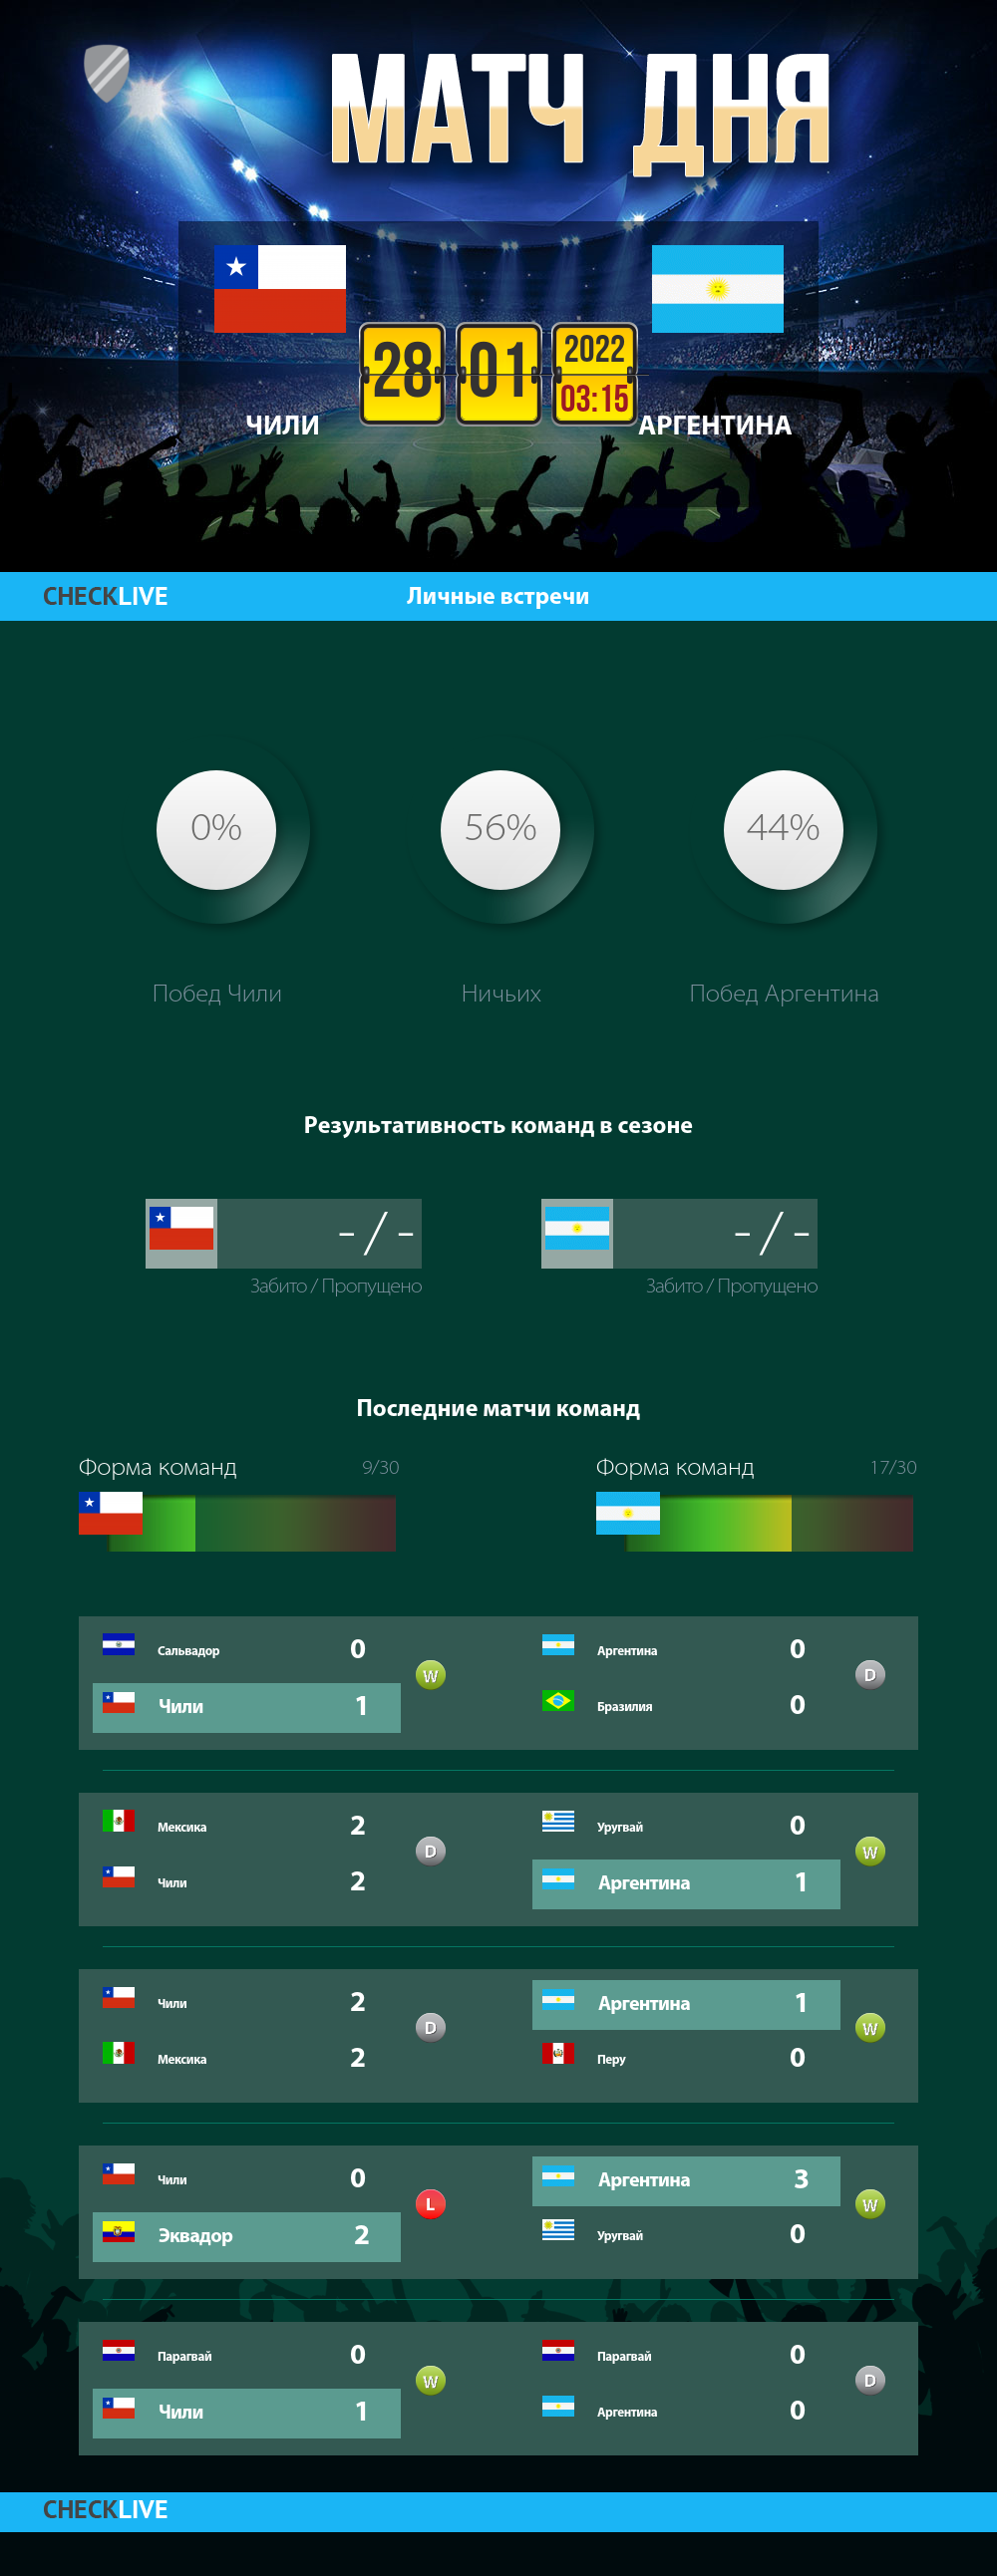 Инфографика Чили и Аргентина матч дня 27.01.2022